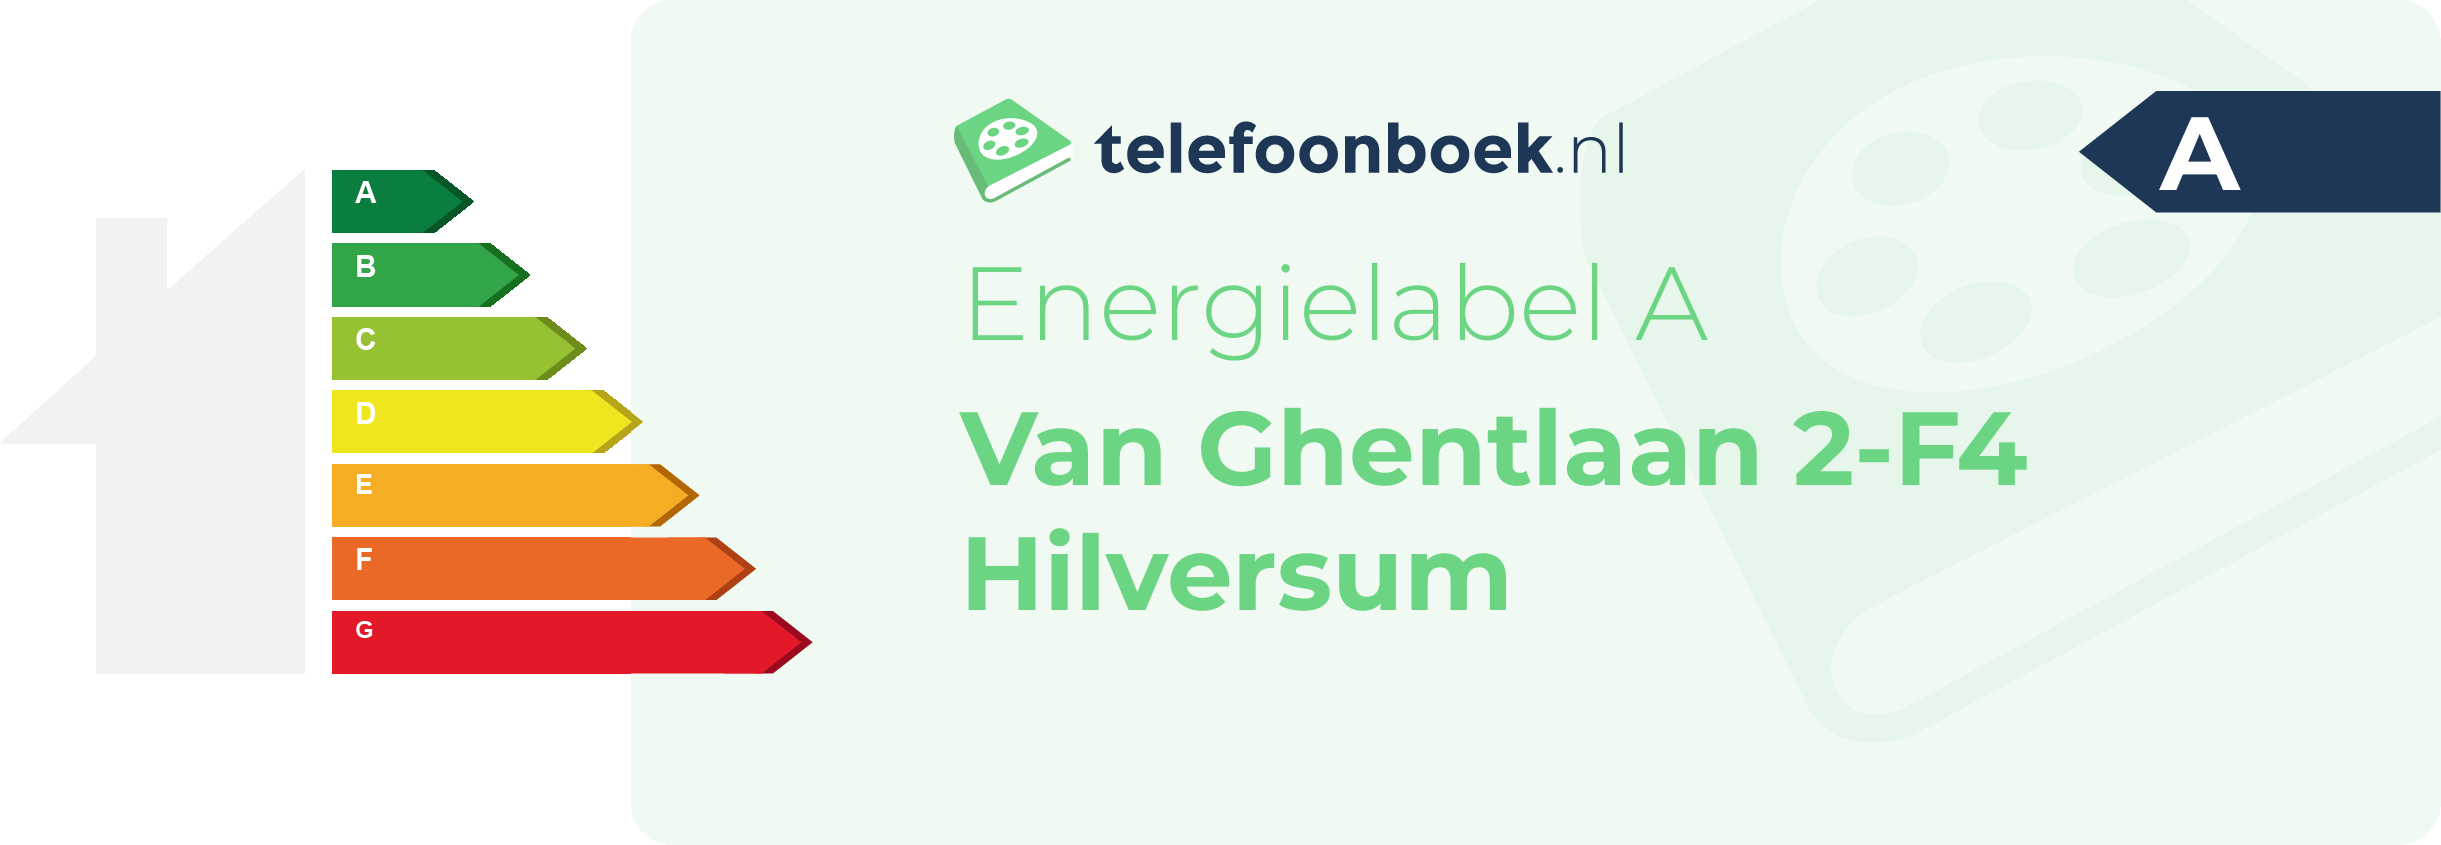 Energielabel Van Ghentlaan 2-F4 Hilversum